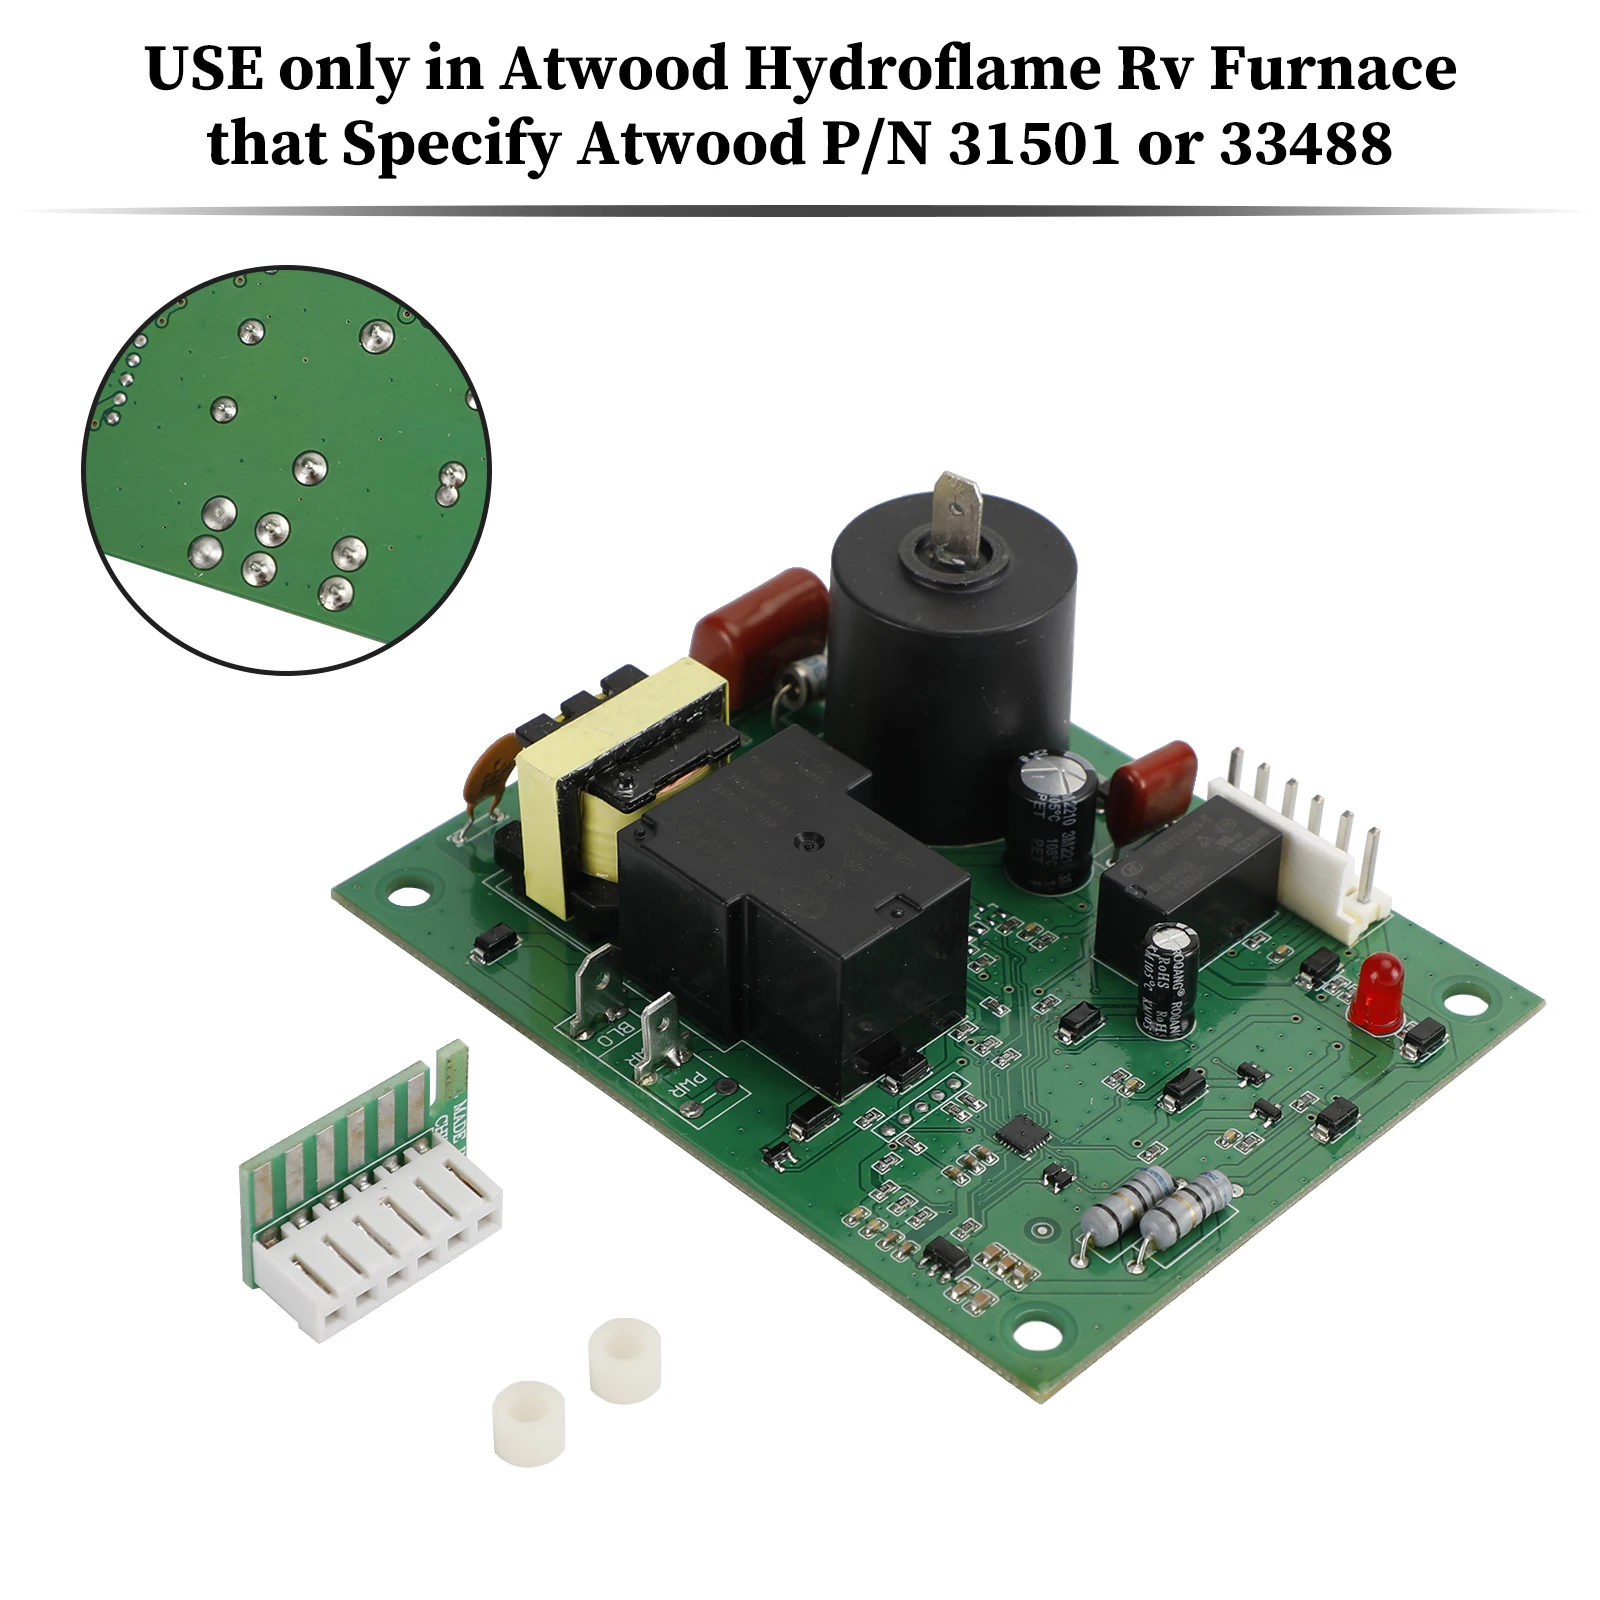 Artudatech Flame Furnace PC Board kit Part 31501 33488 33727 Подходит для автомобильных аксессуаров Atwood Hydro